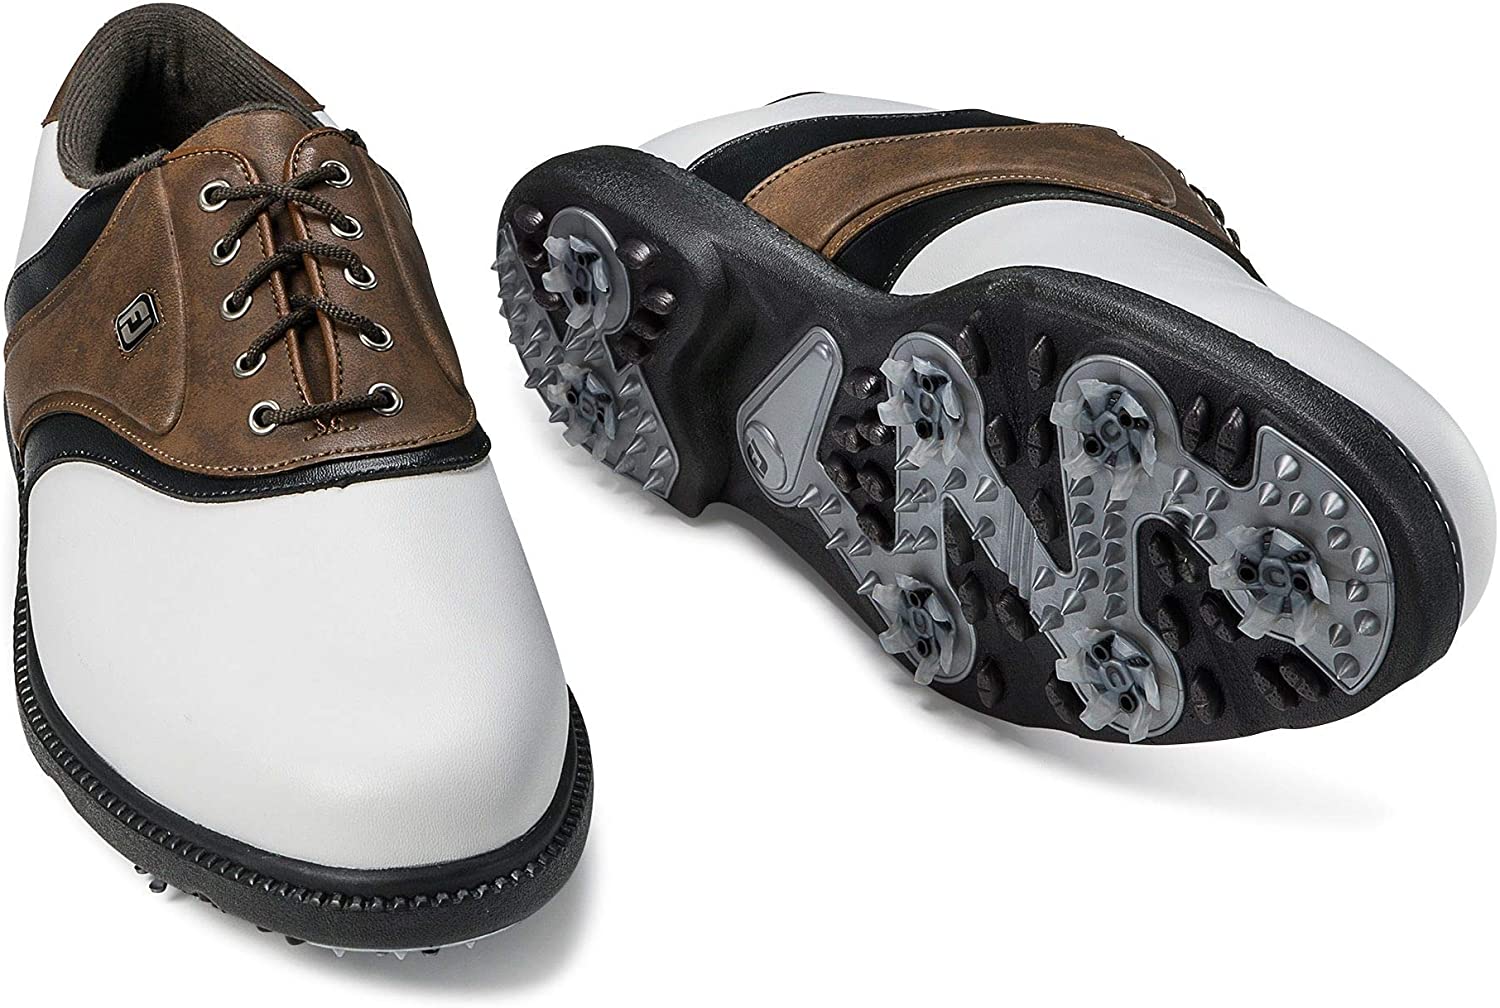 FootJoy FJ Originals Golf Shoes (White/Brown, 10) - image 4 of 7